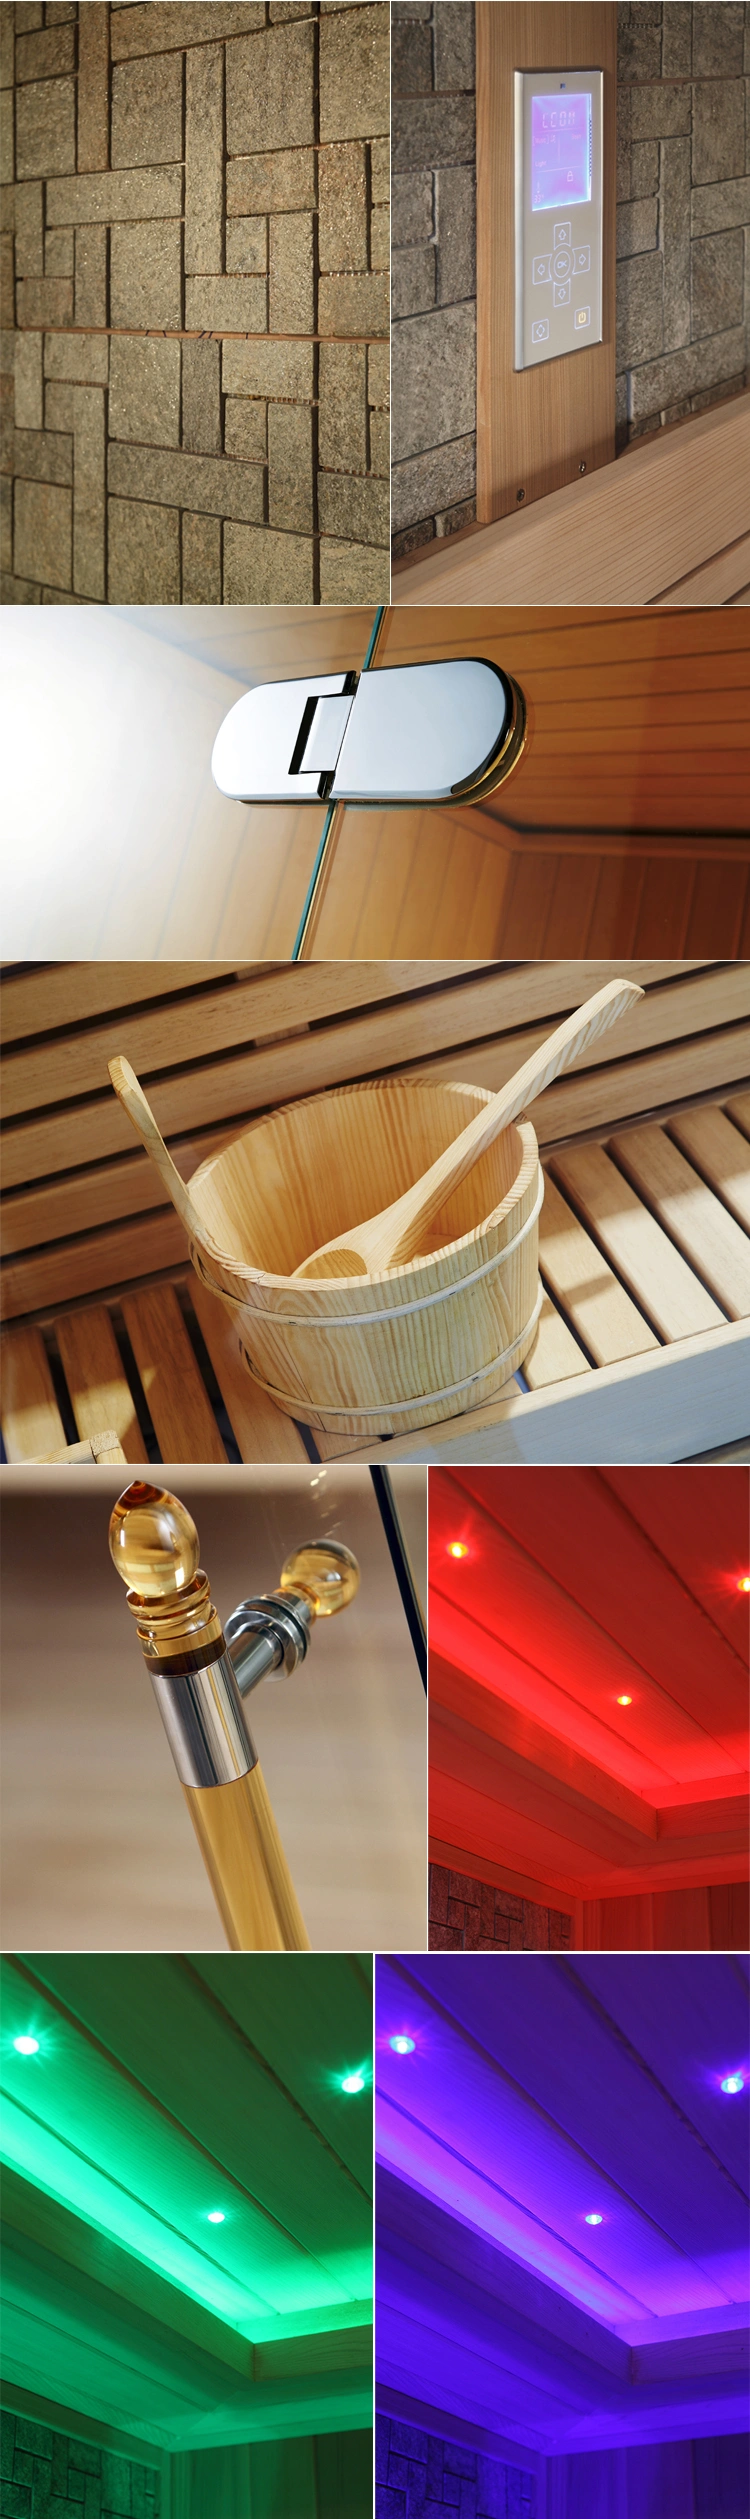 Foshan Manufacturer Charming LED Overhead Light Sauna Room Dry Steam